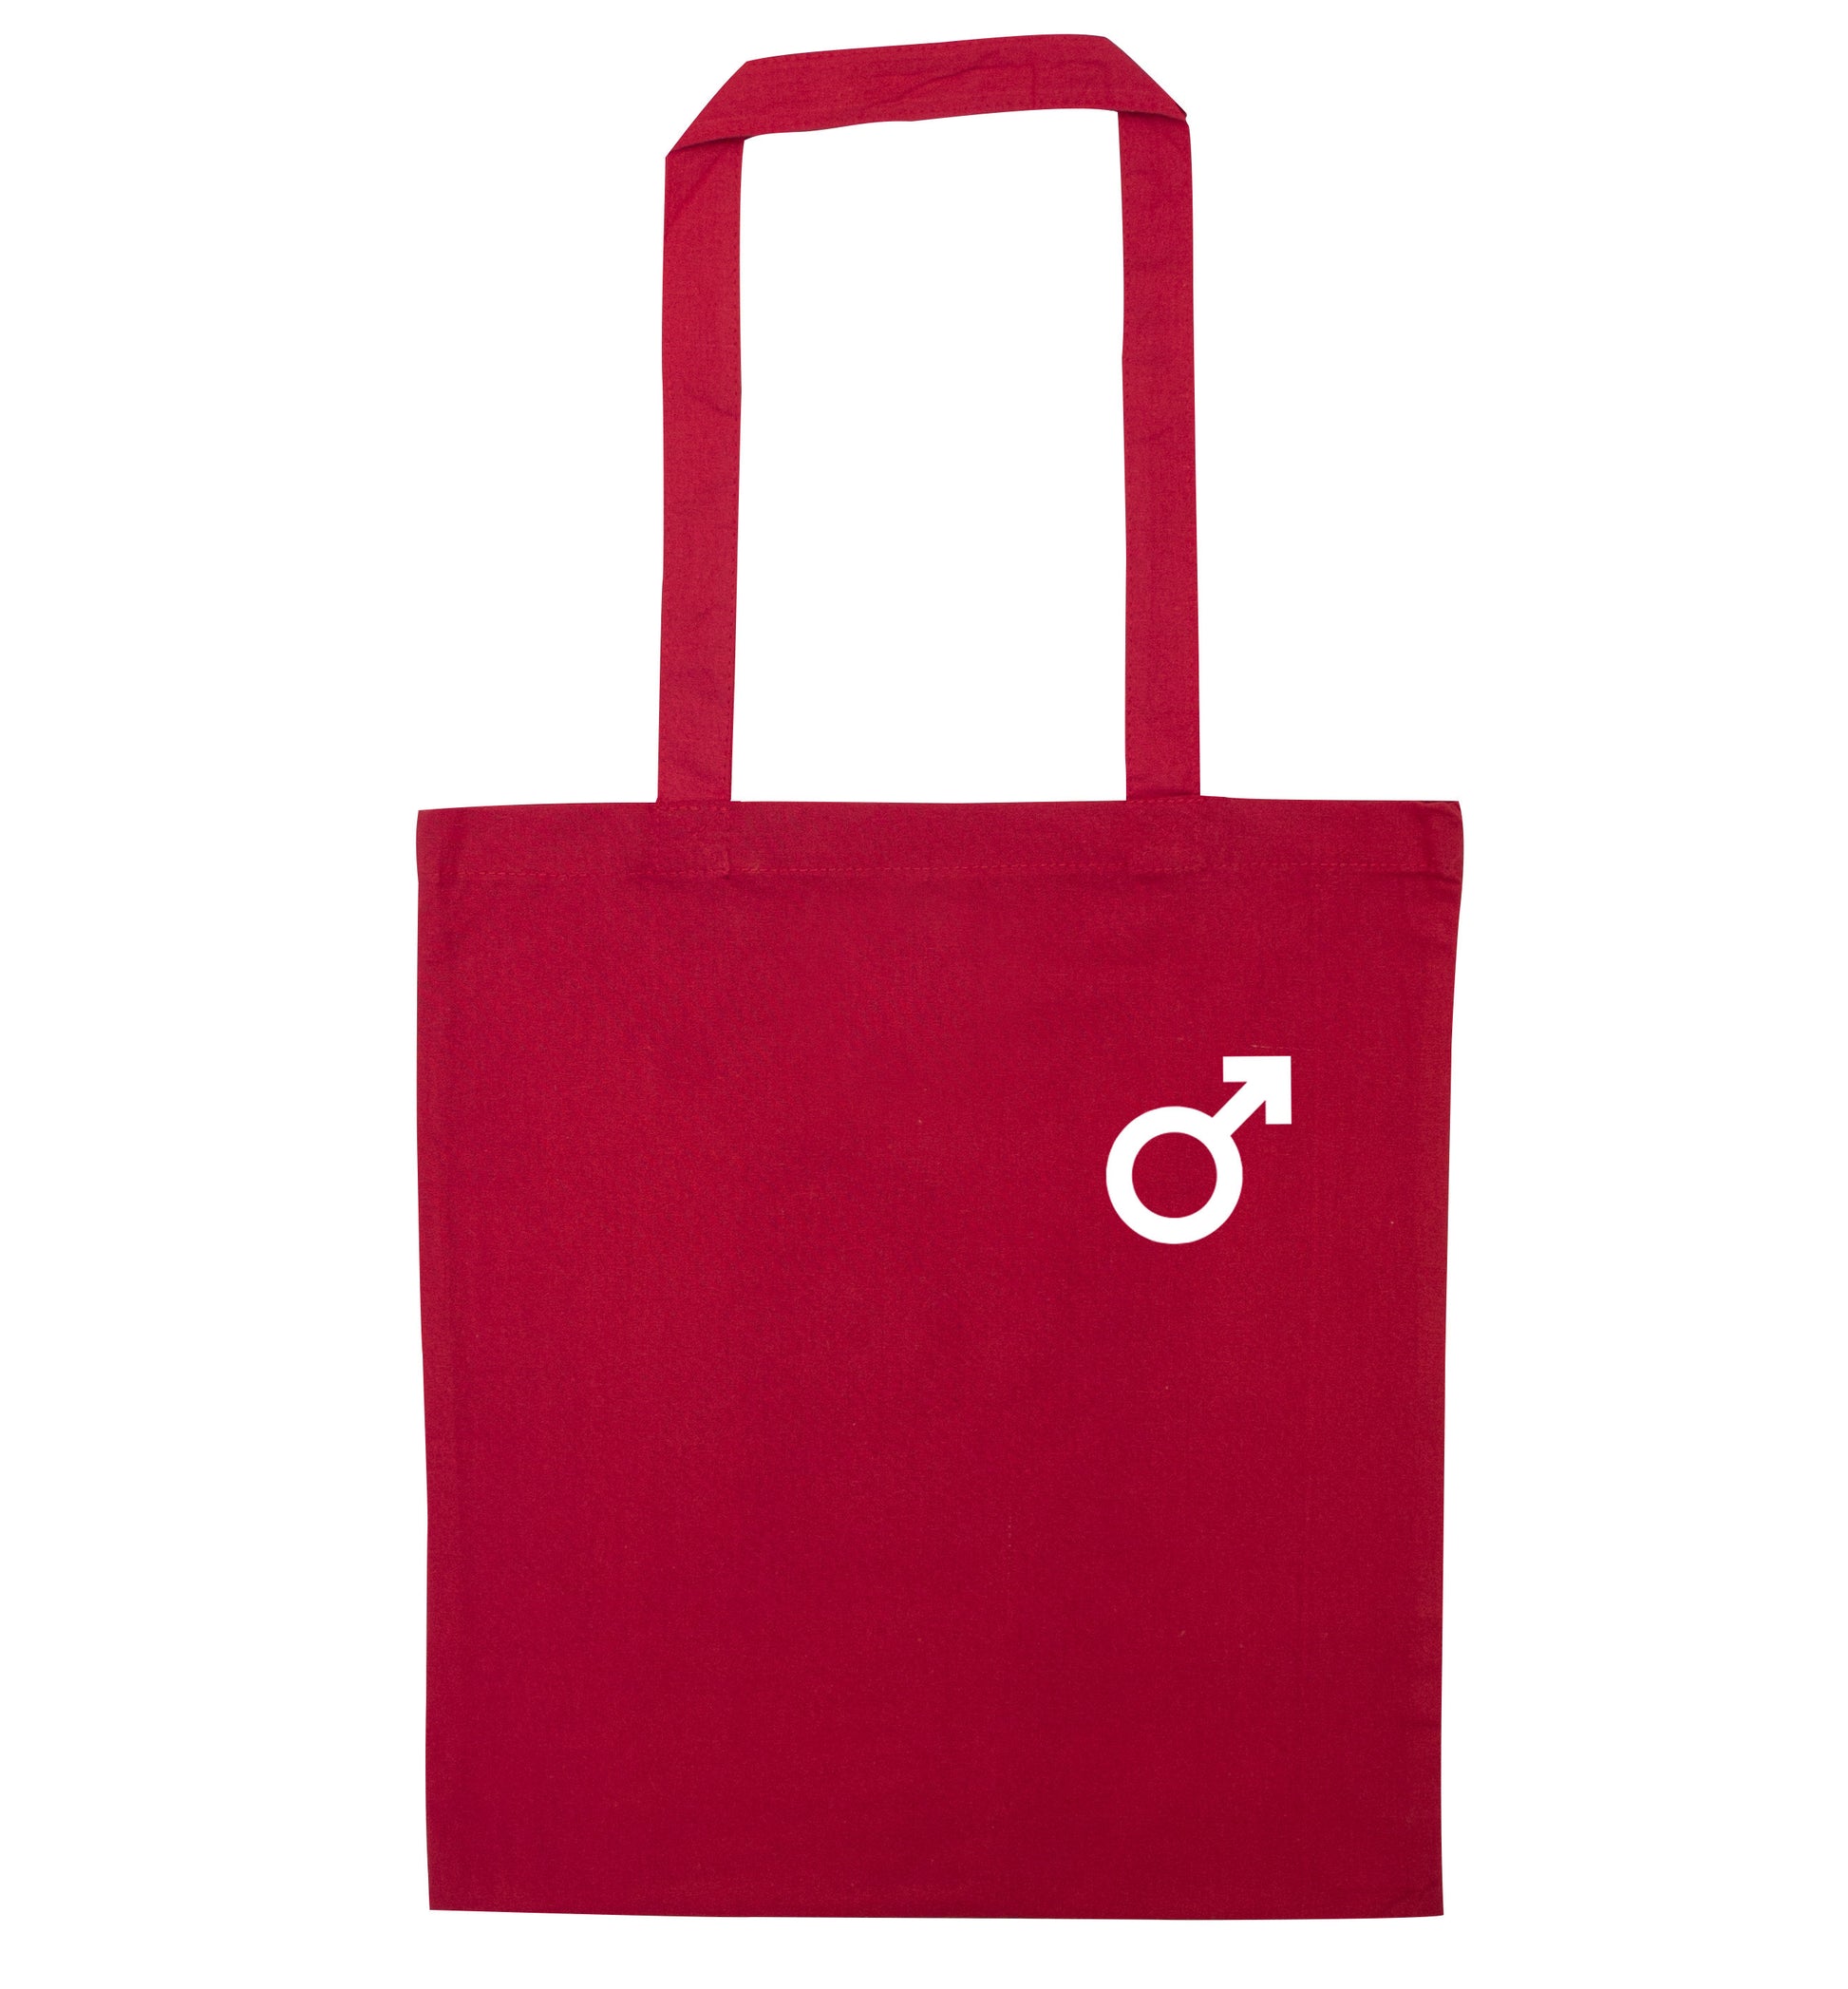 Male symbol pocket red tote bag